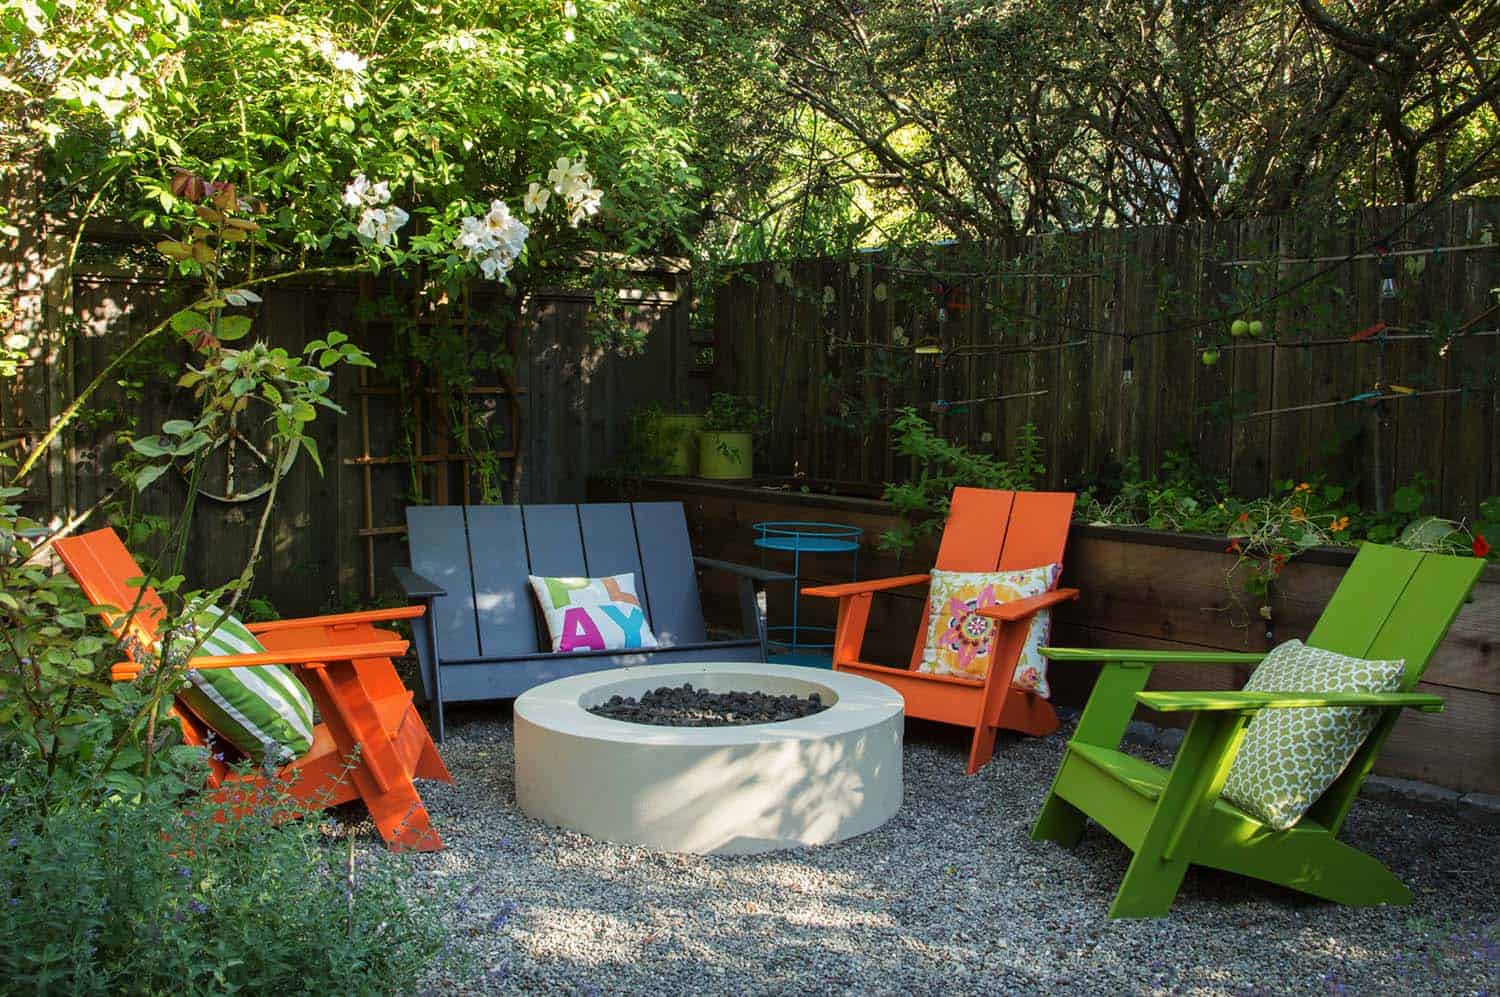 28 Inspiring Fire Pit Ideas To Create A Fabulous Backyard Oasis